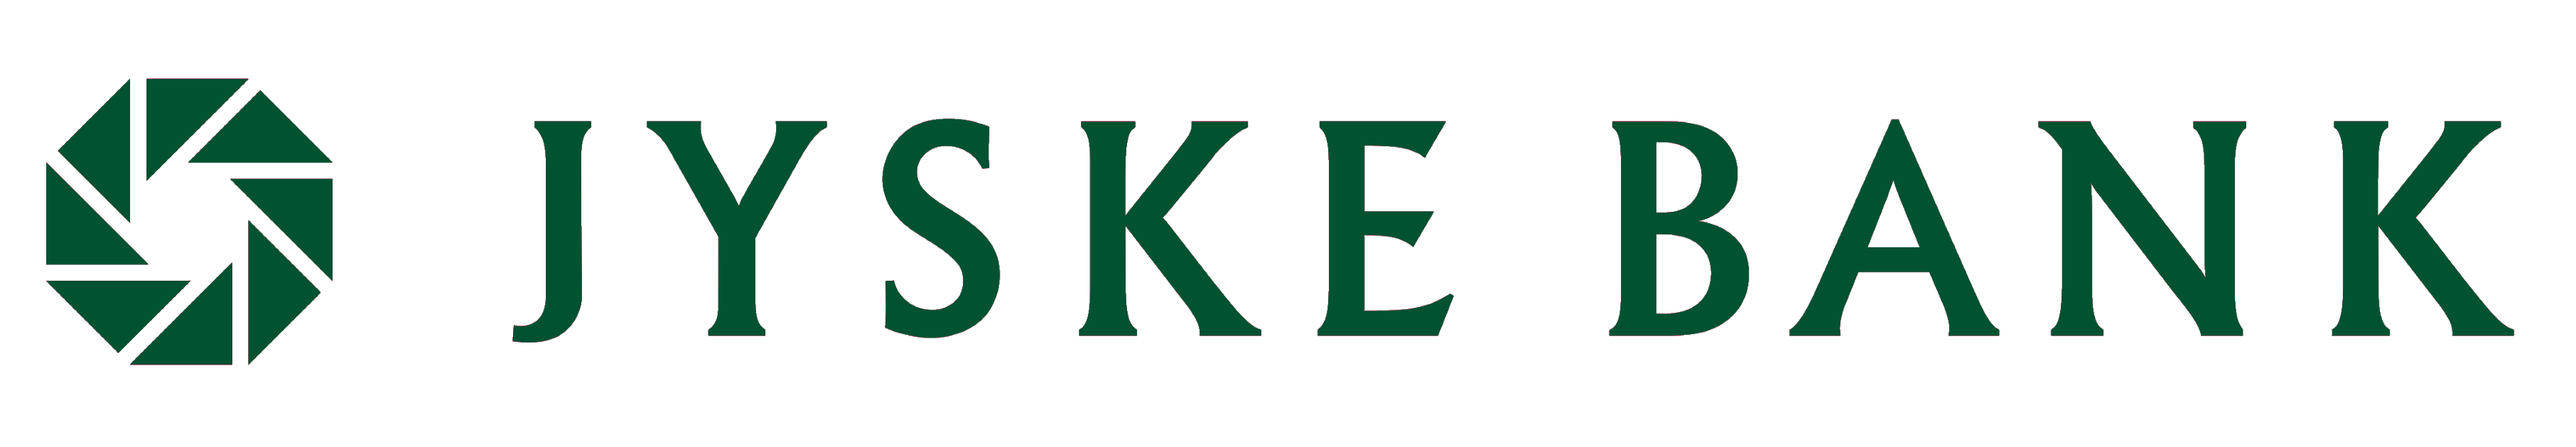 Jyske Bank – Logos Download